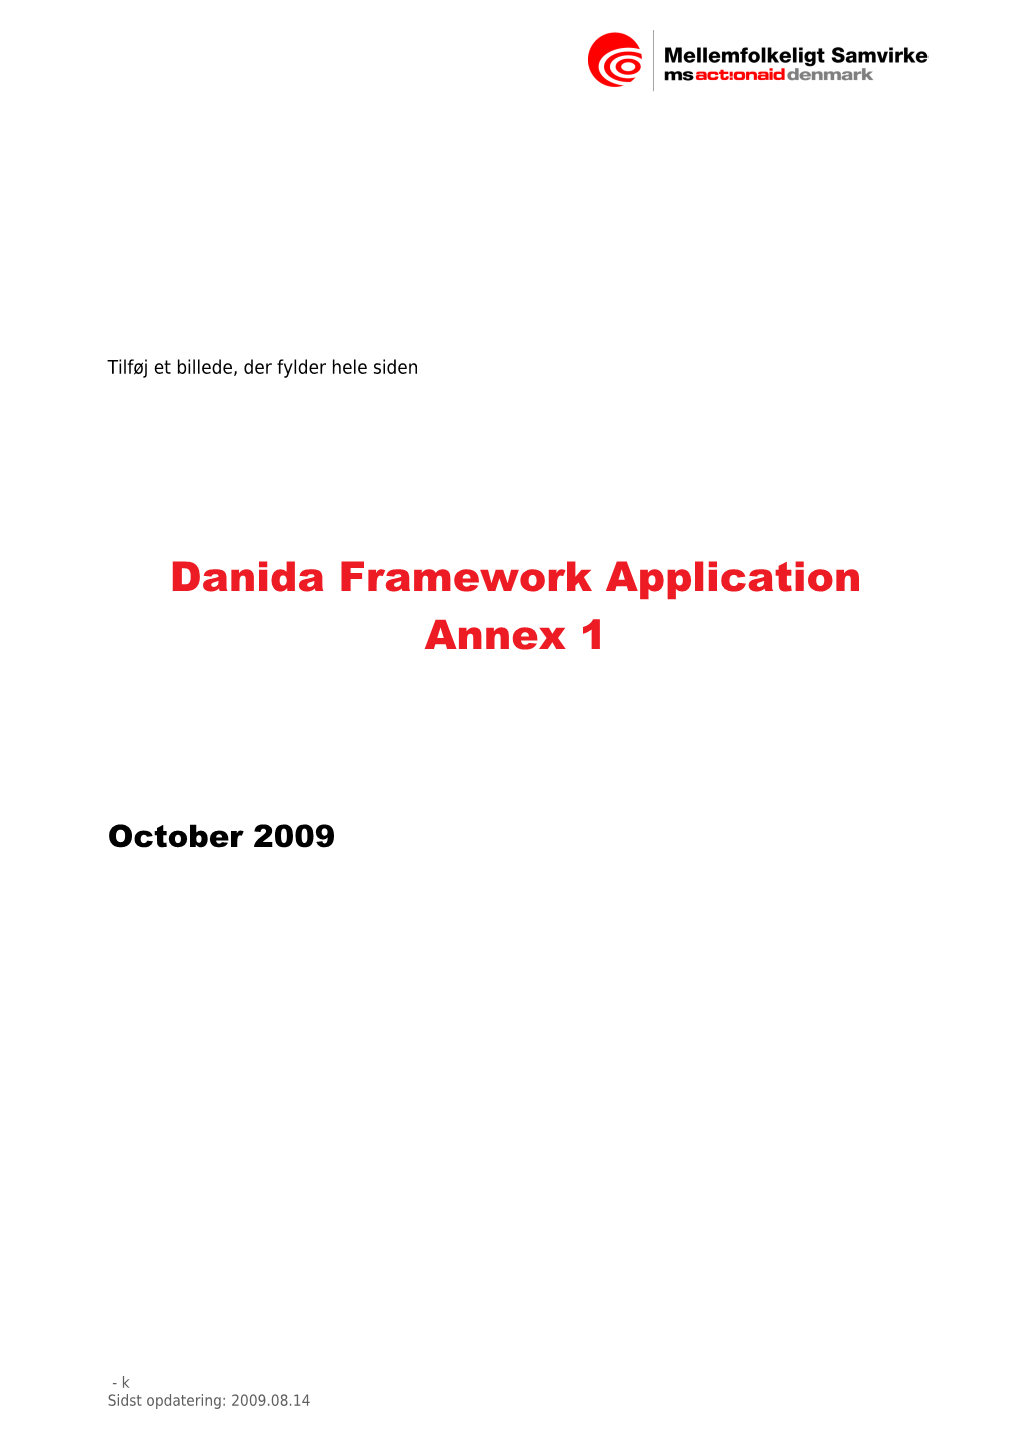 Danida Framework Application Annex 1